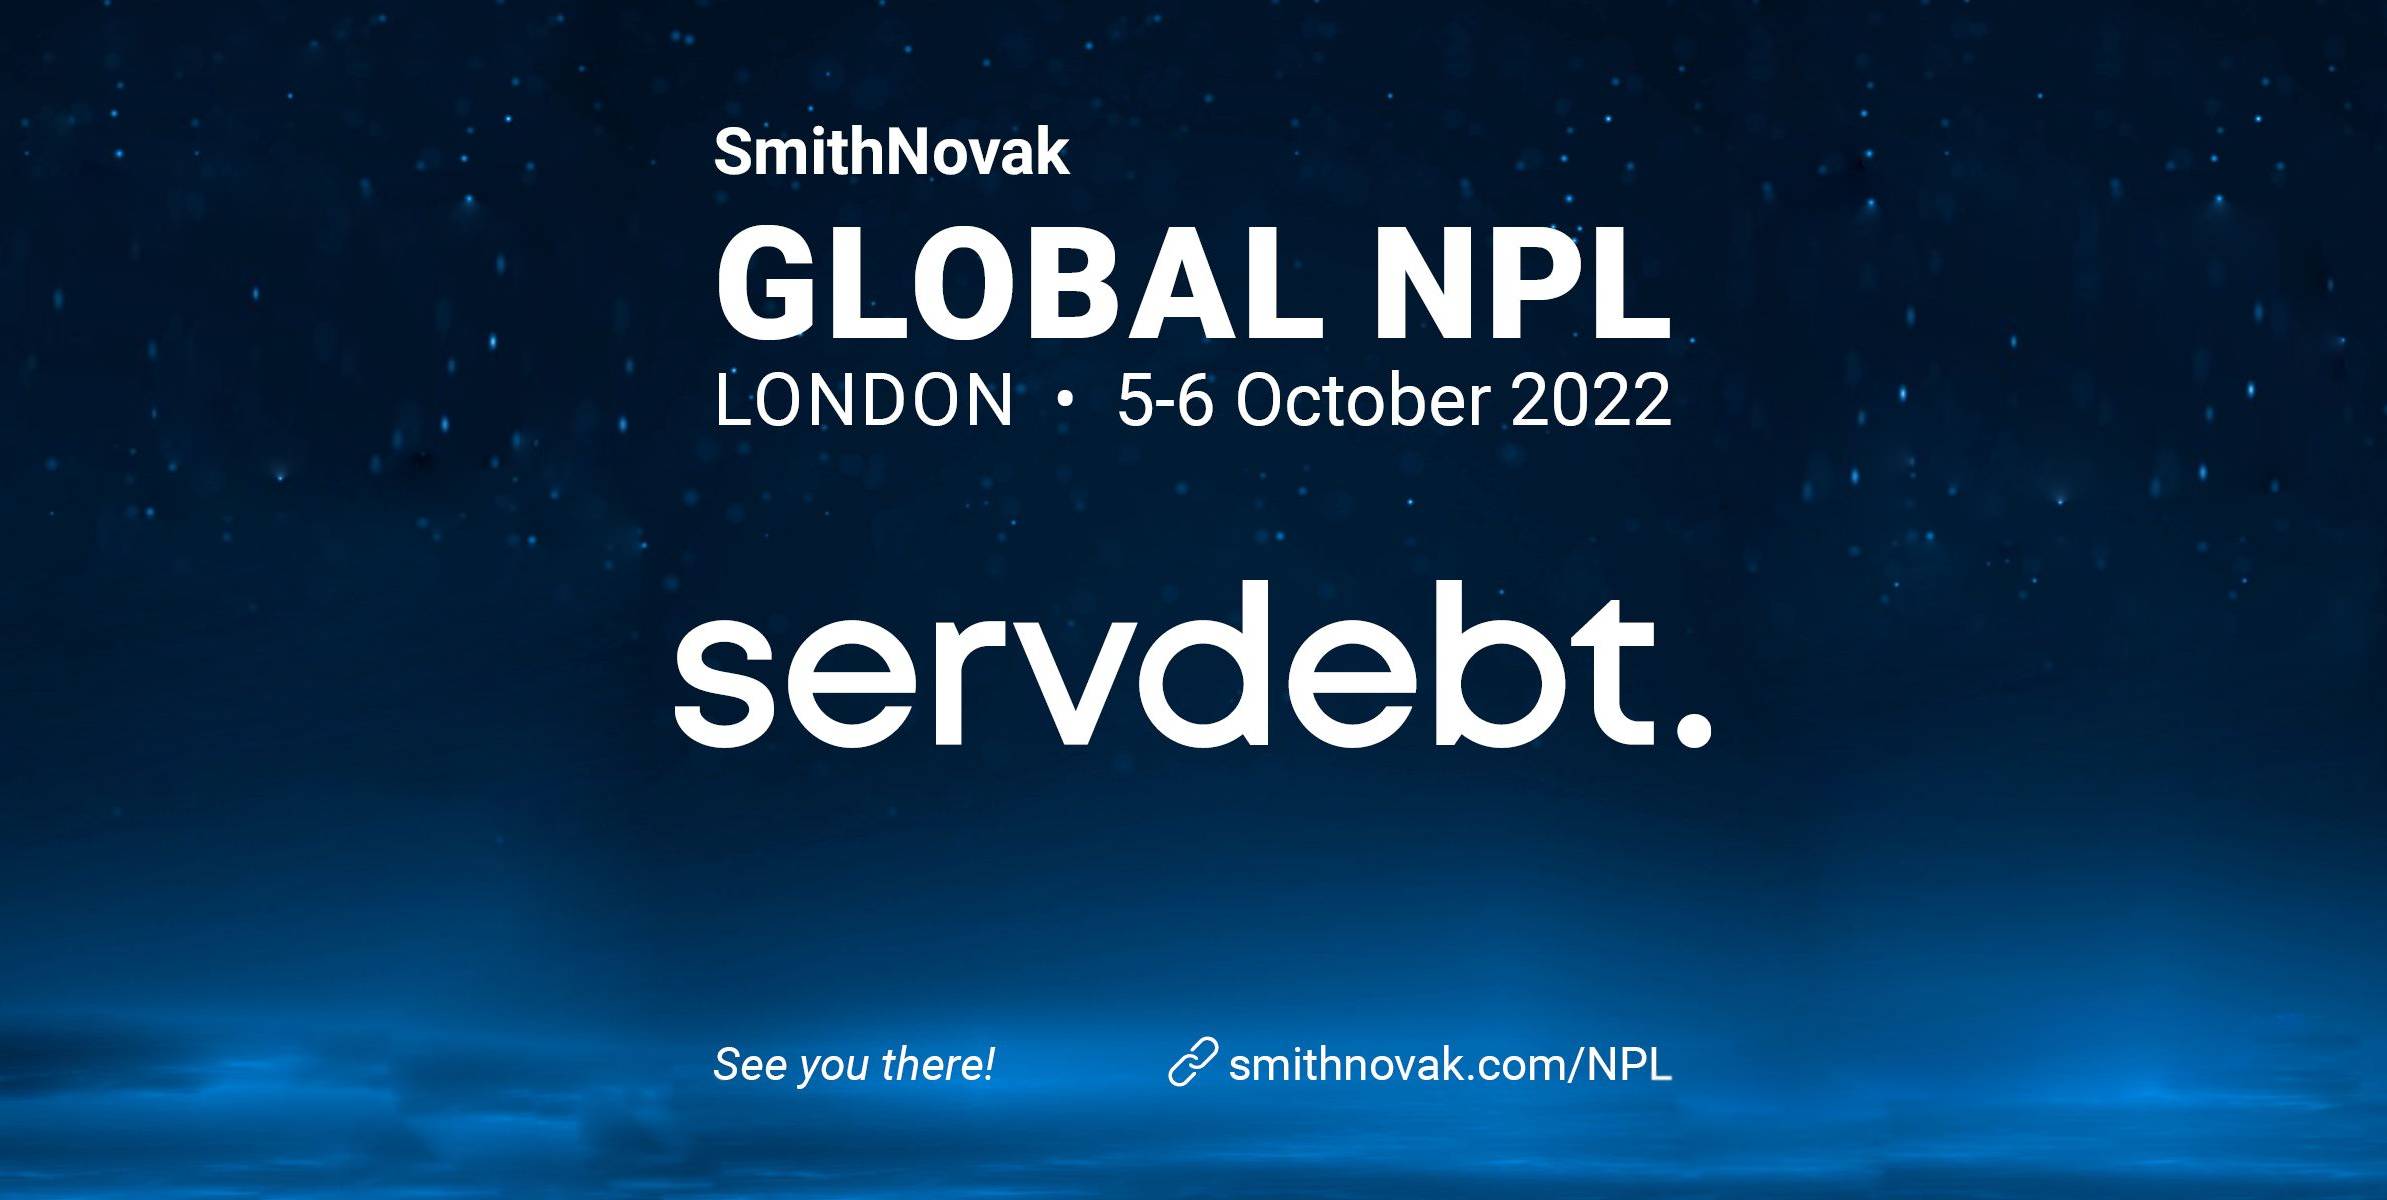 Servdebt to Sponsor the Global NPL 2022 International Summit